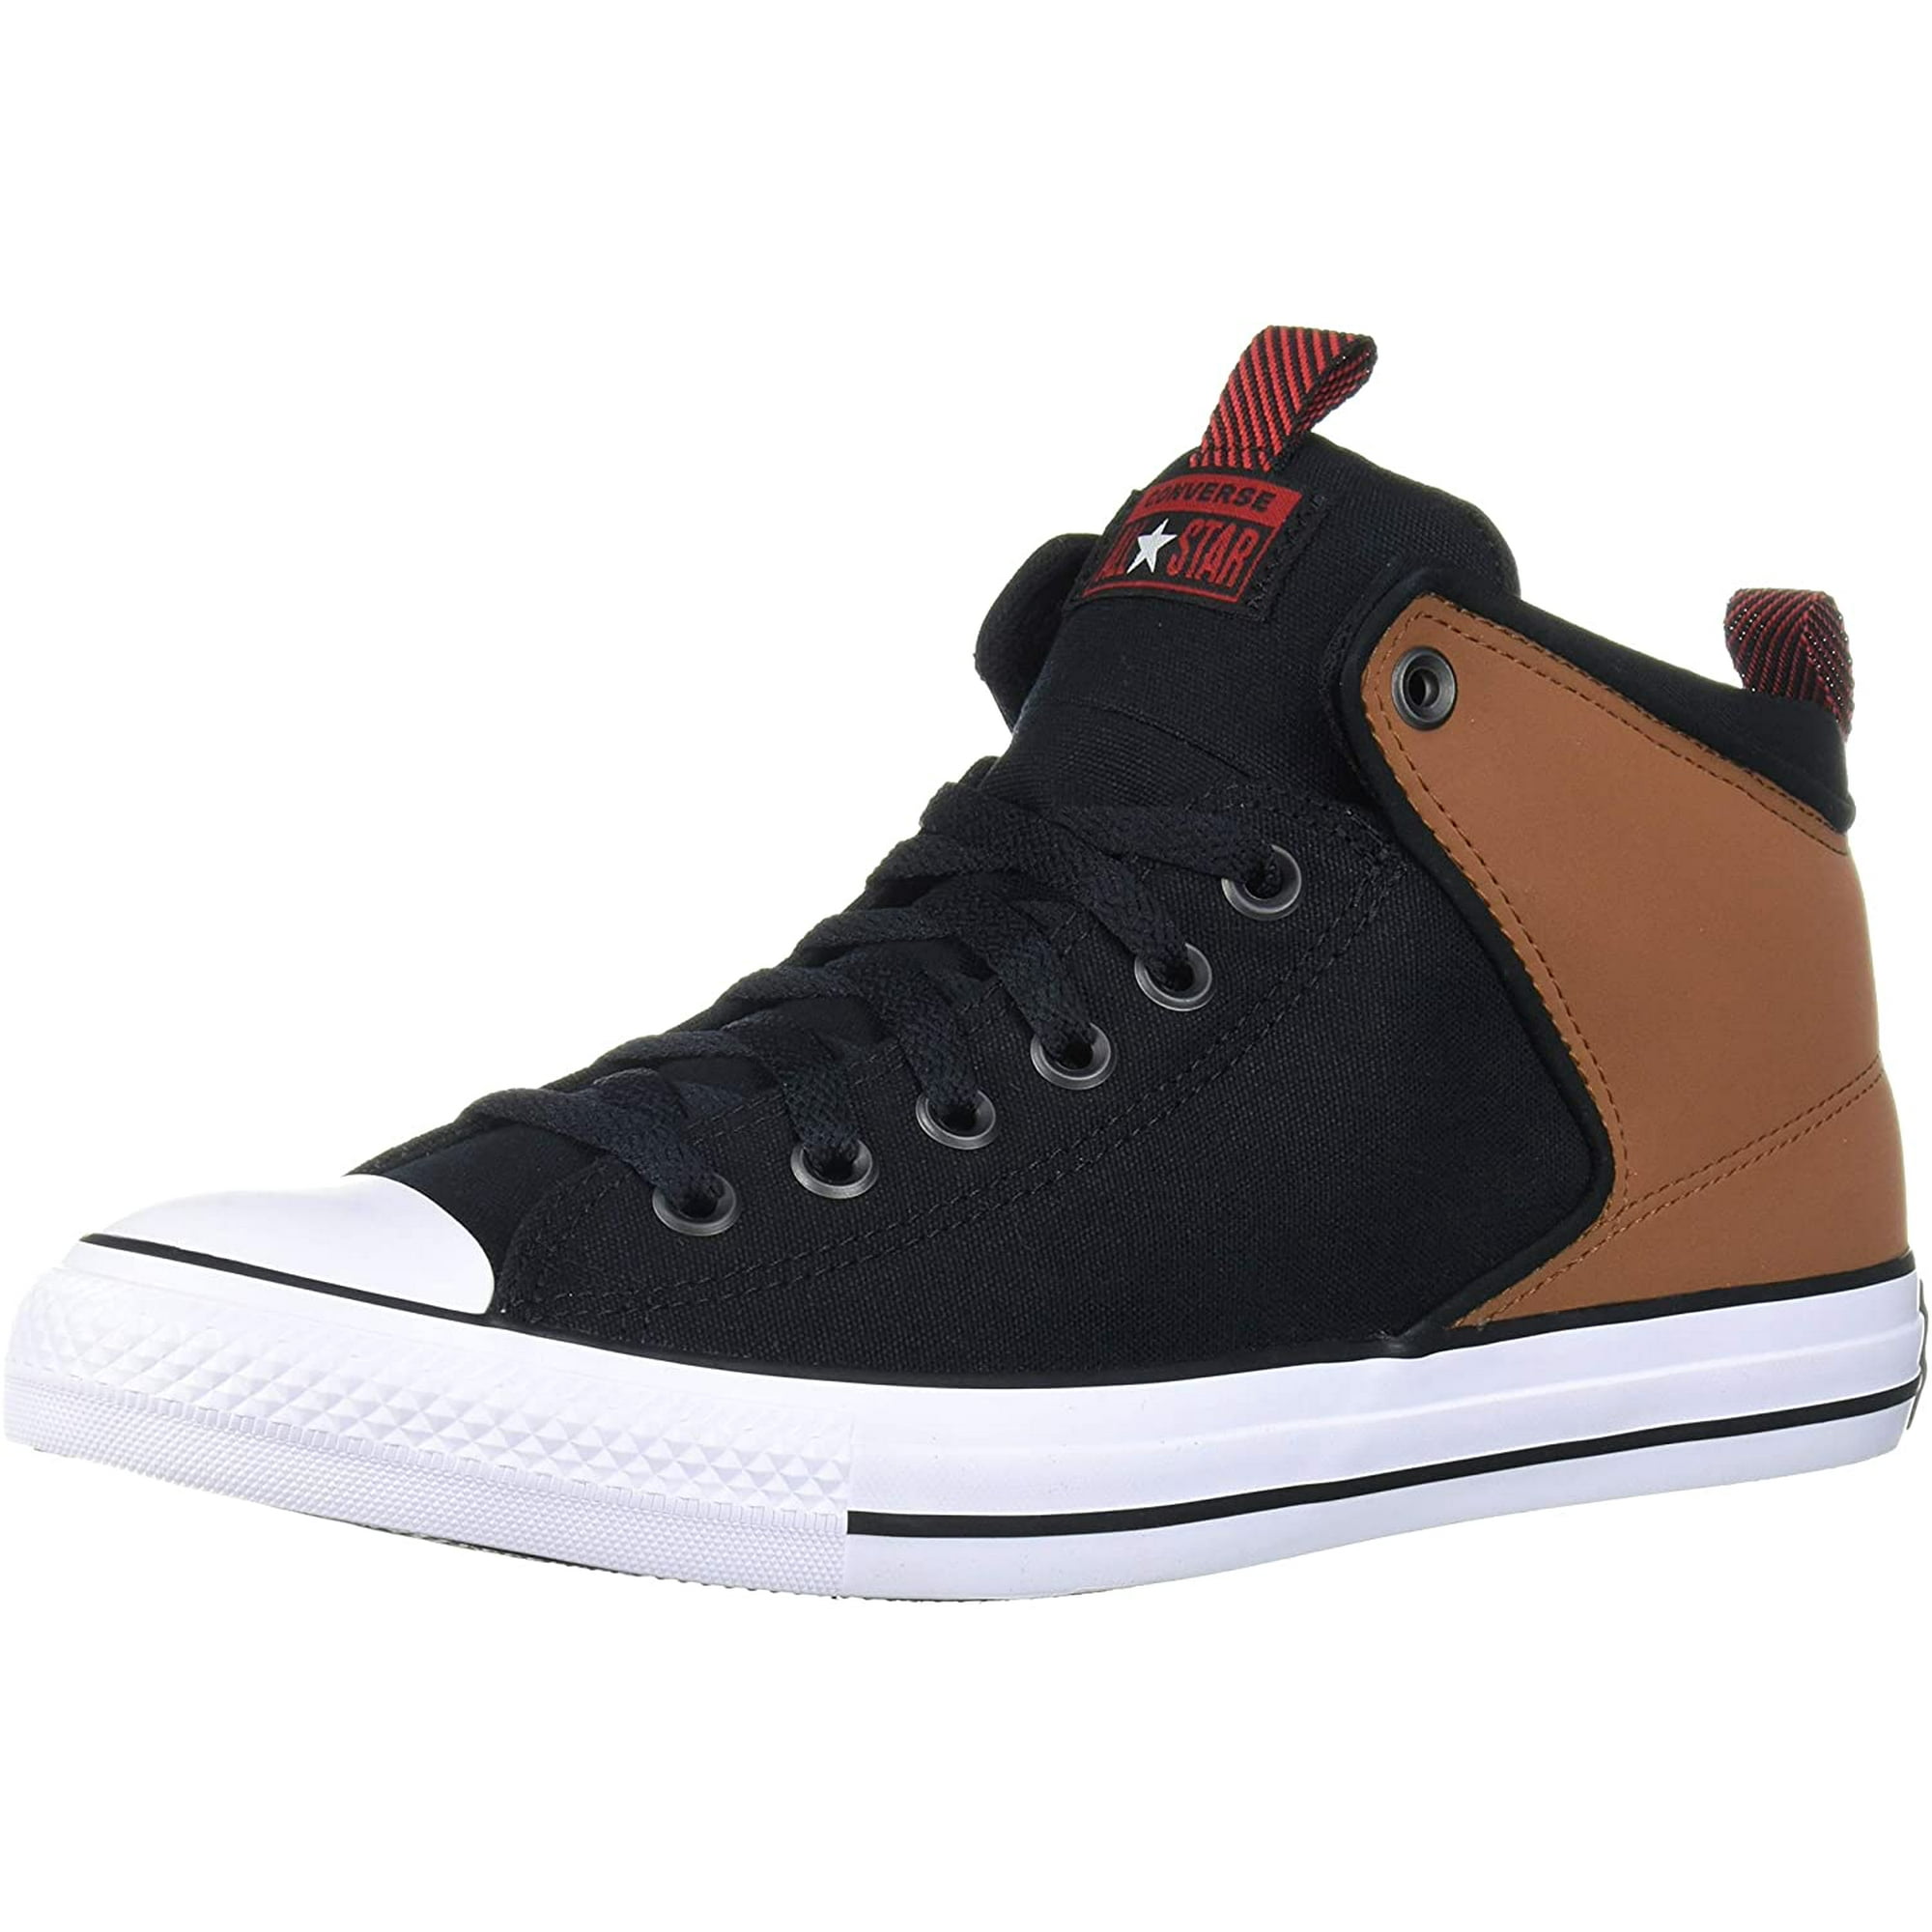 Converse Chuck Taylor All Star Street Suede Trim High Top Sneaker, Warm Tan/ Black/White, 11 M US | Walmart Canada